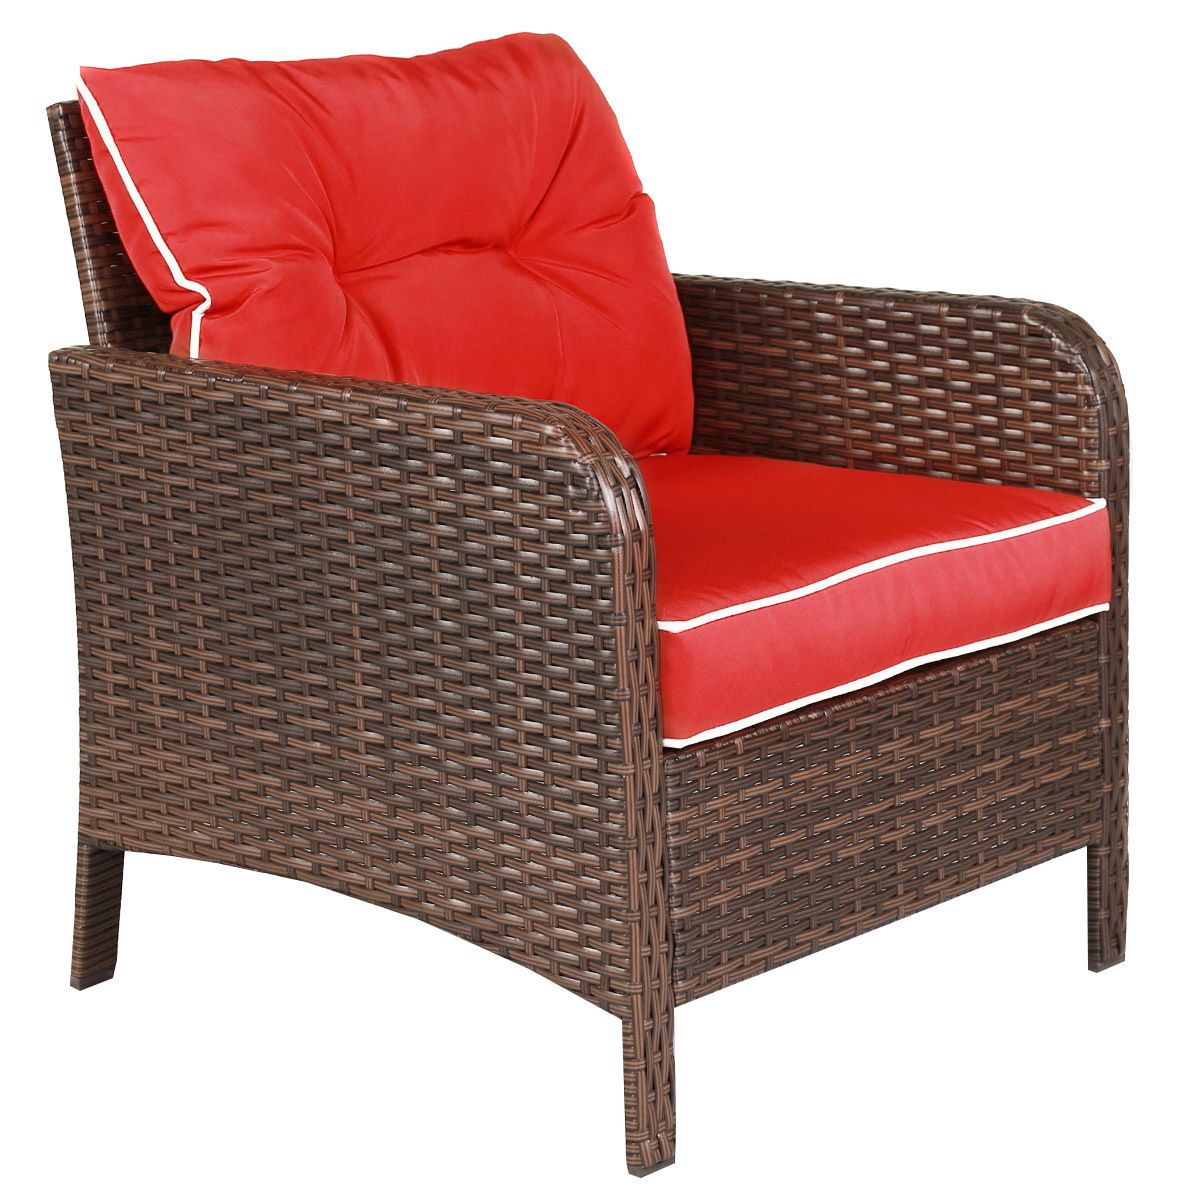 Red Loveseat Outdoor Conversation Sets With 2020 Goplus Conversation Set, 5 Piece Rattan Wicker Furniture Set Sofa (View 13 of 15)